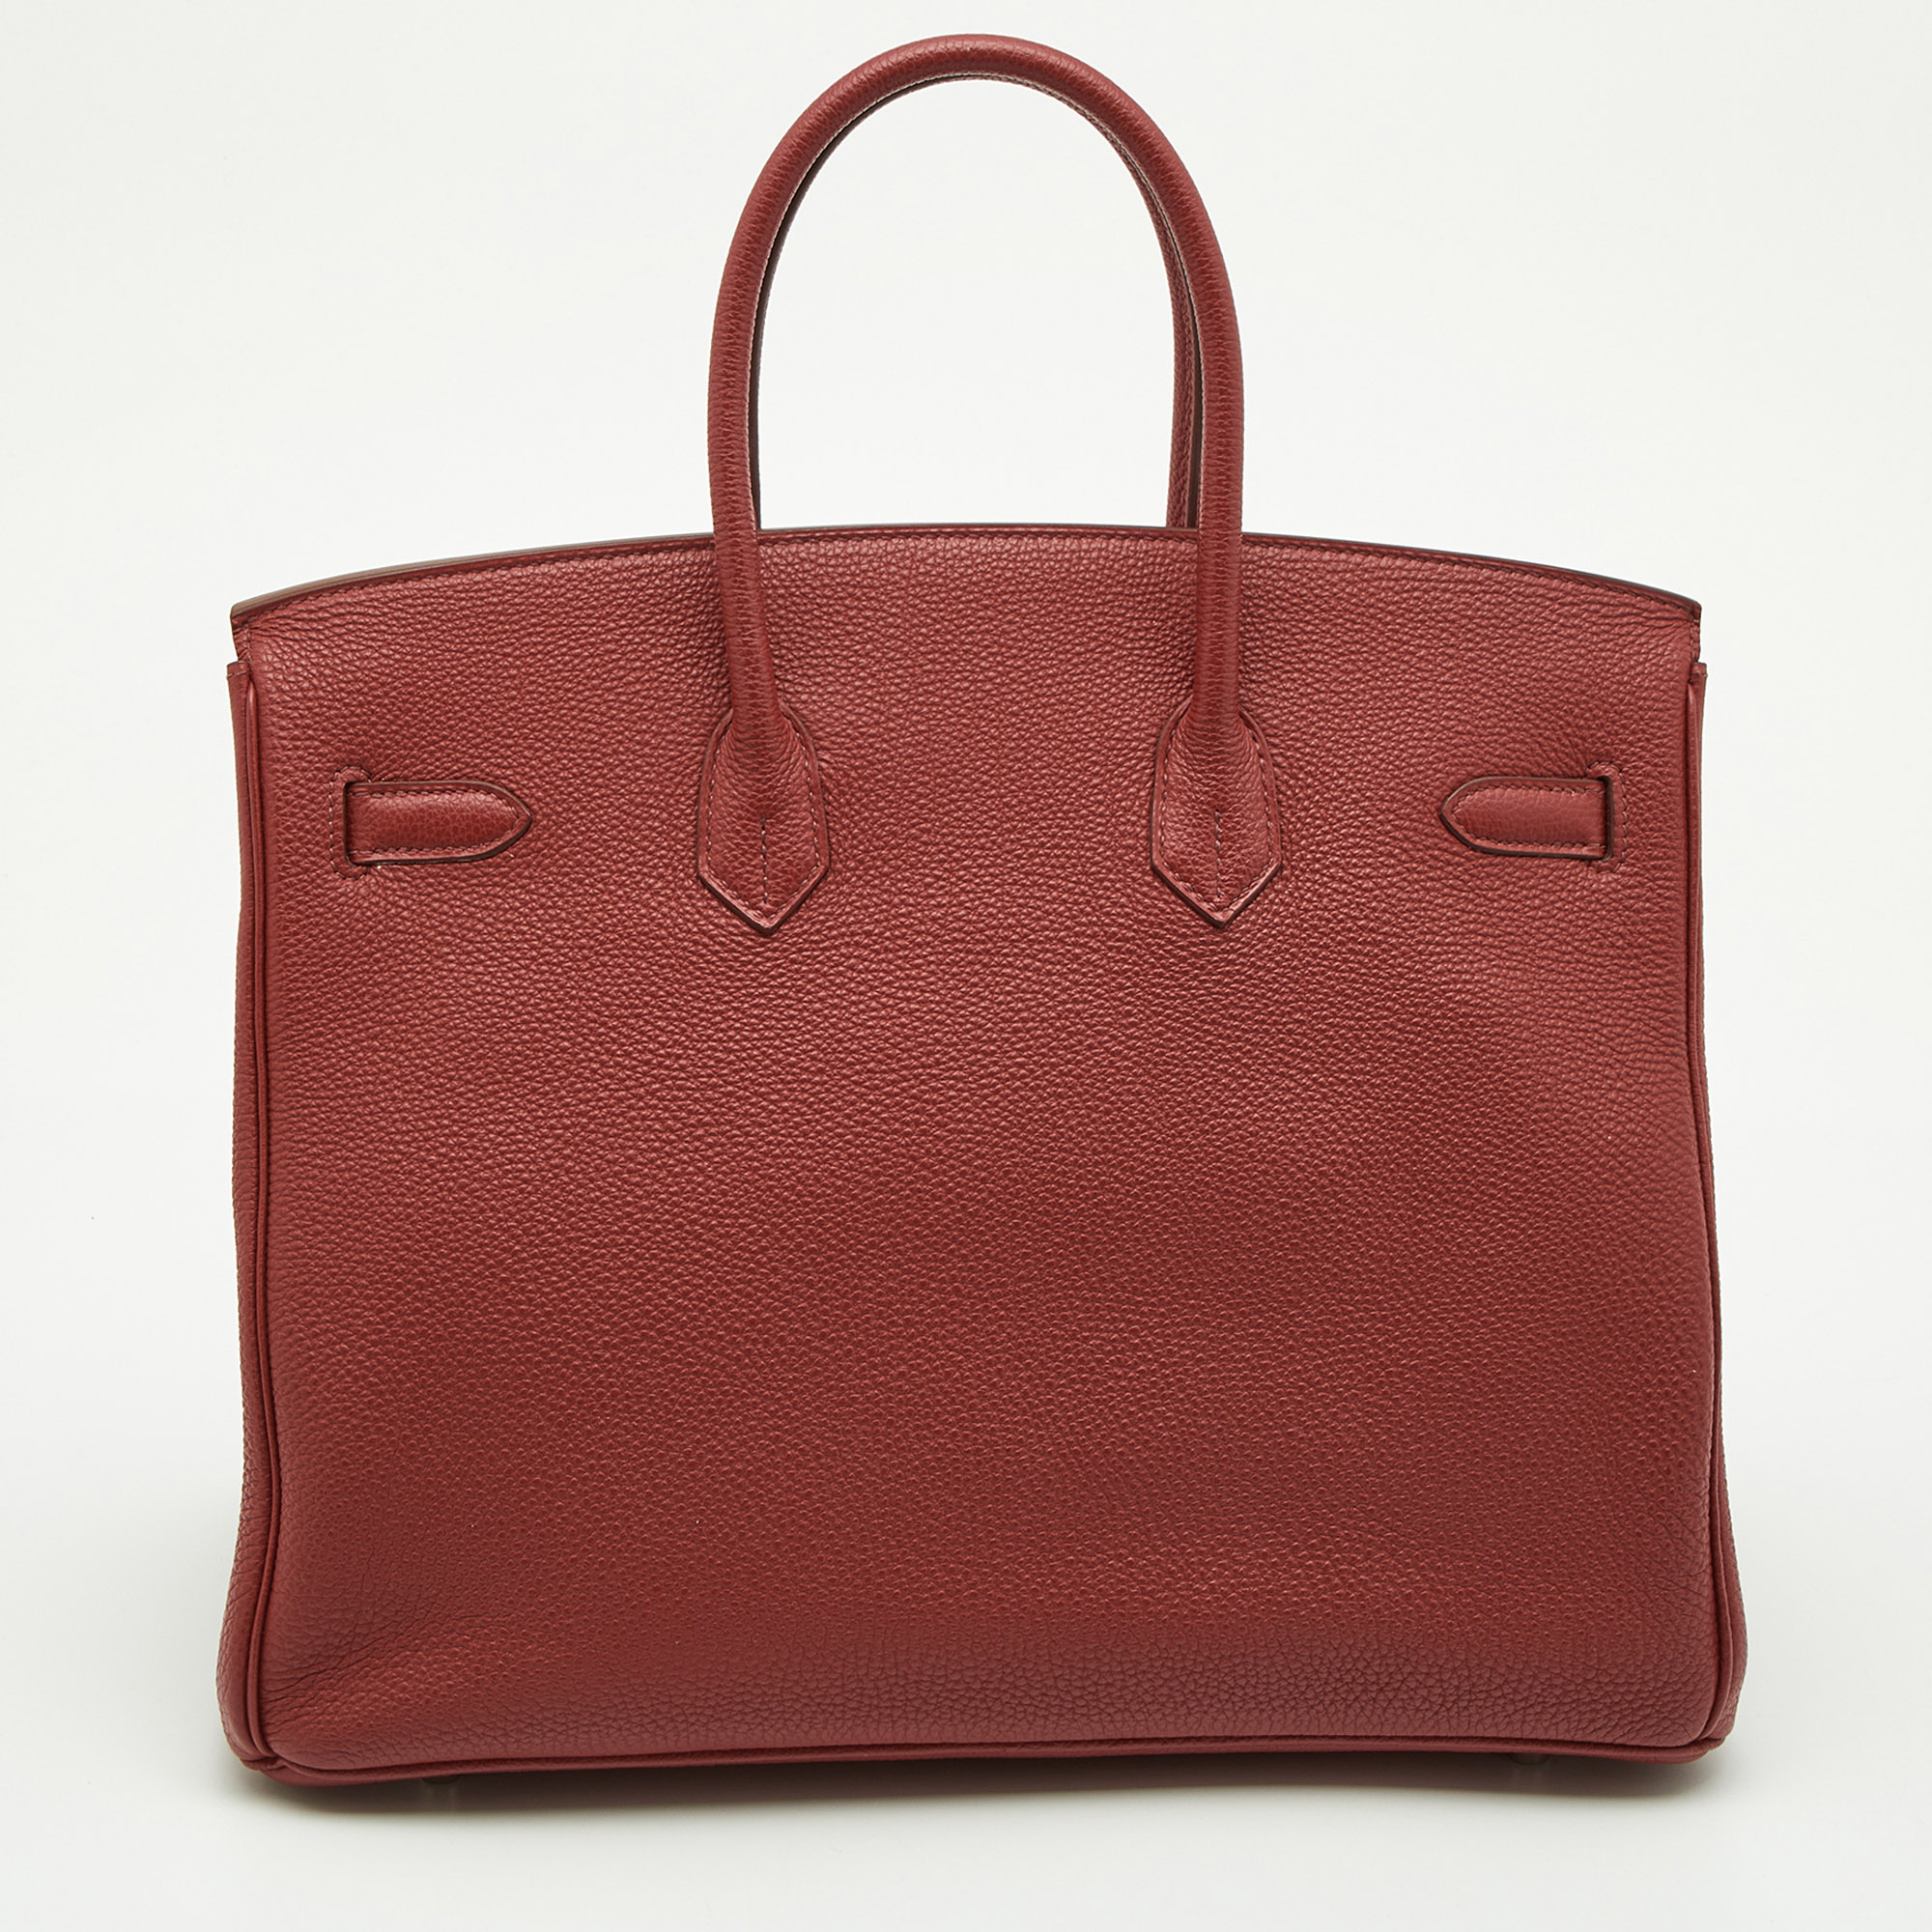 Hermes Rouge Garance Togo Leather Palladium Finish Birkin 35 Bag